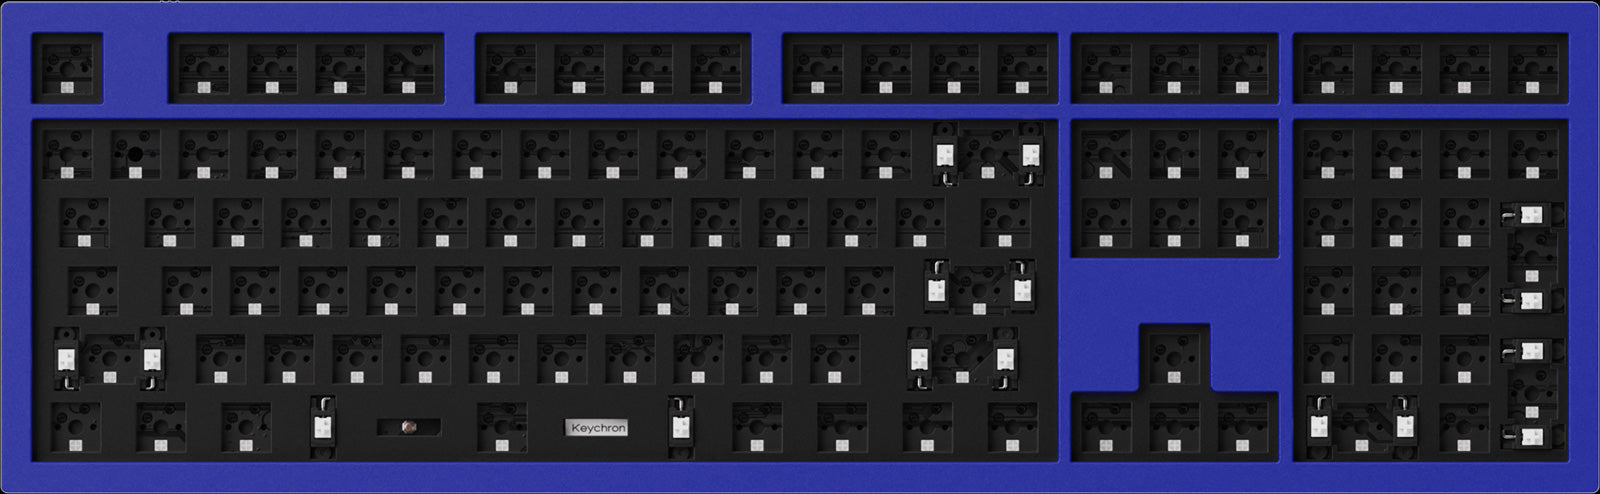 Barebone US layout of Keychron Q6 Full Size Custom Mechanical Keyboard